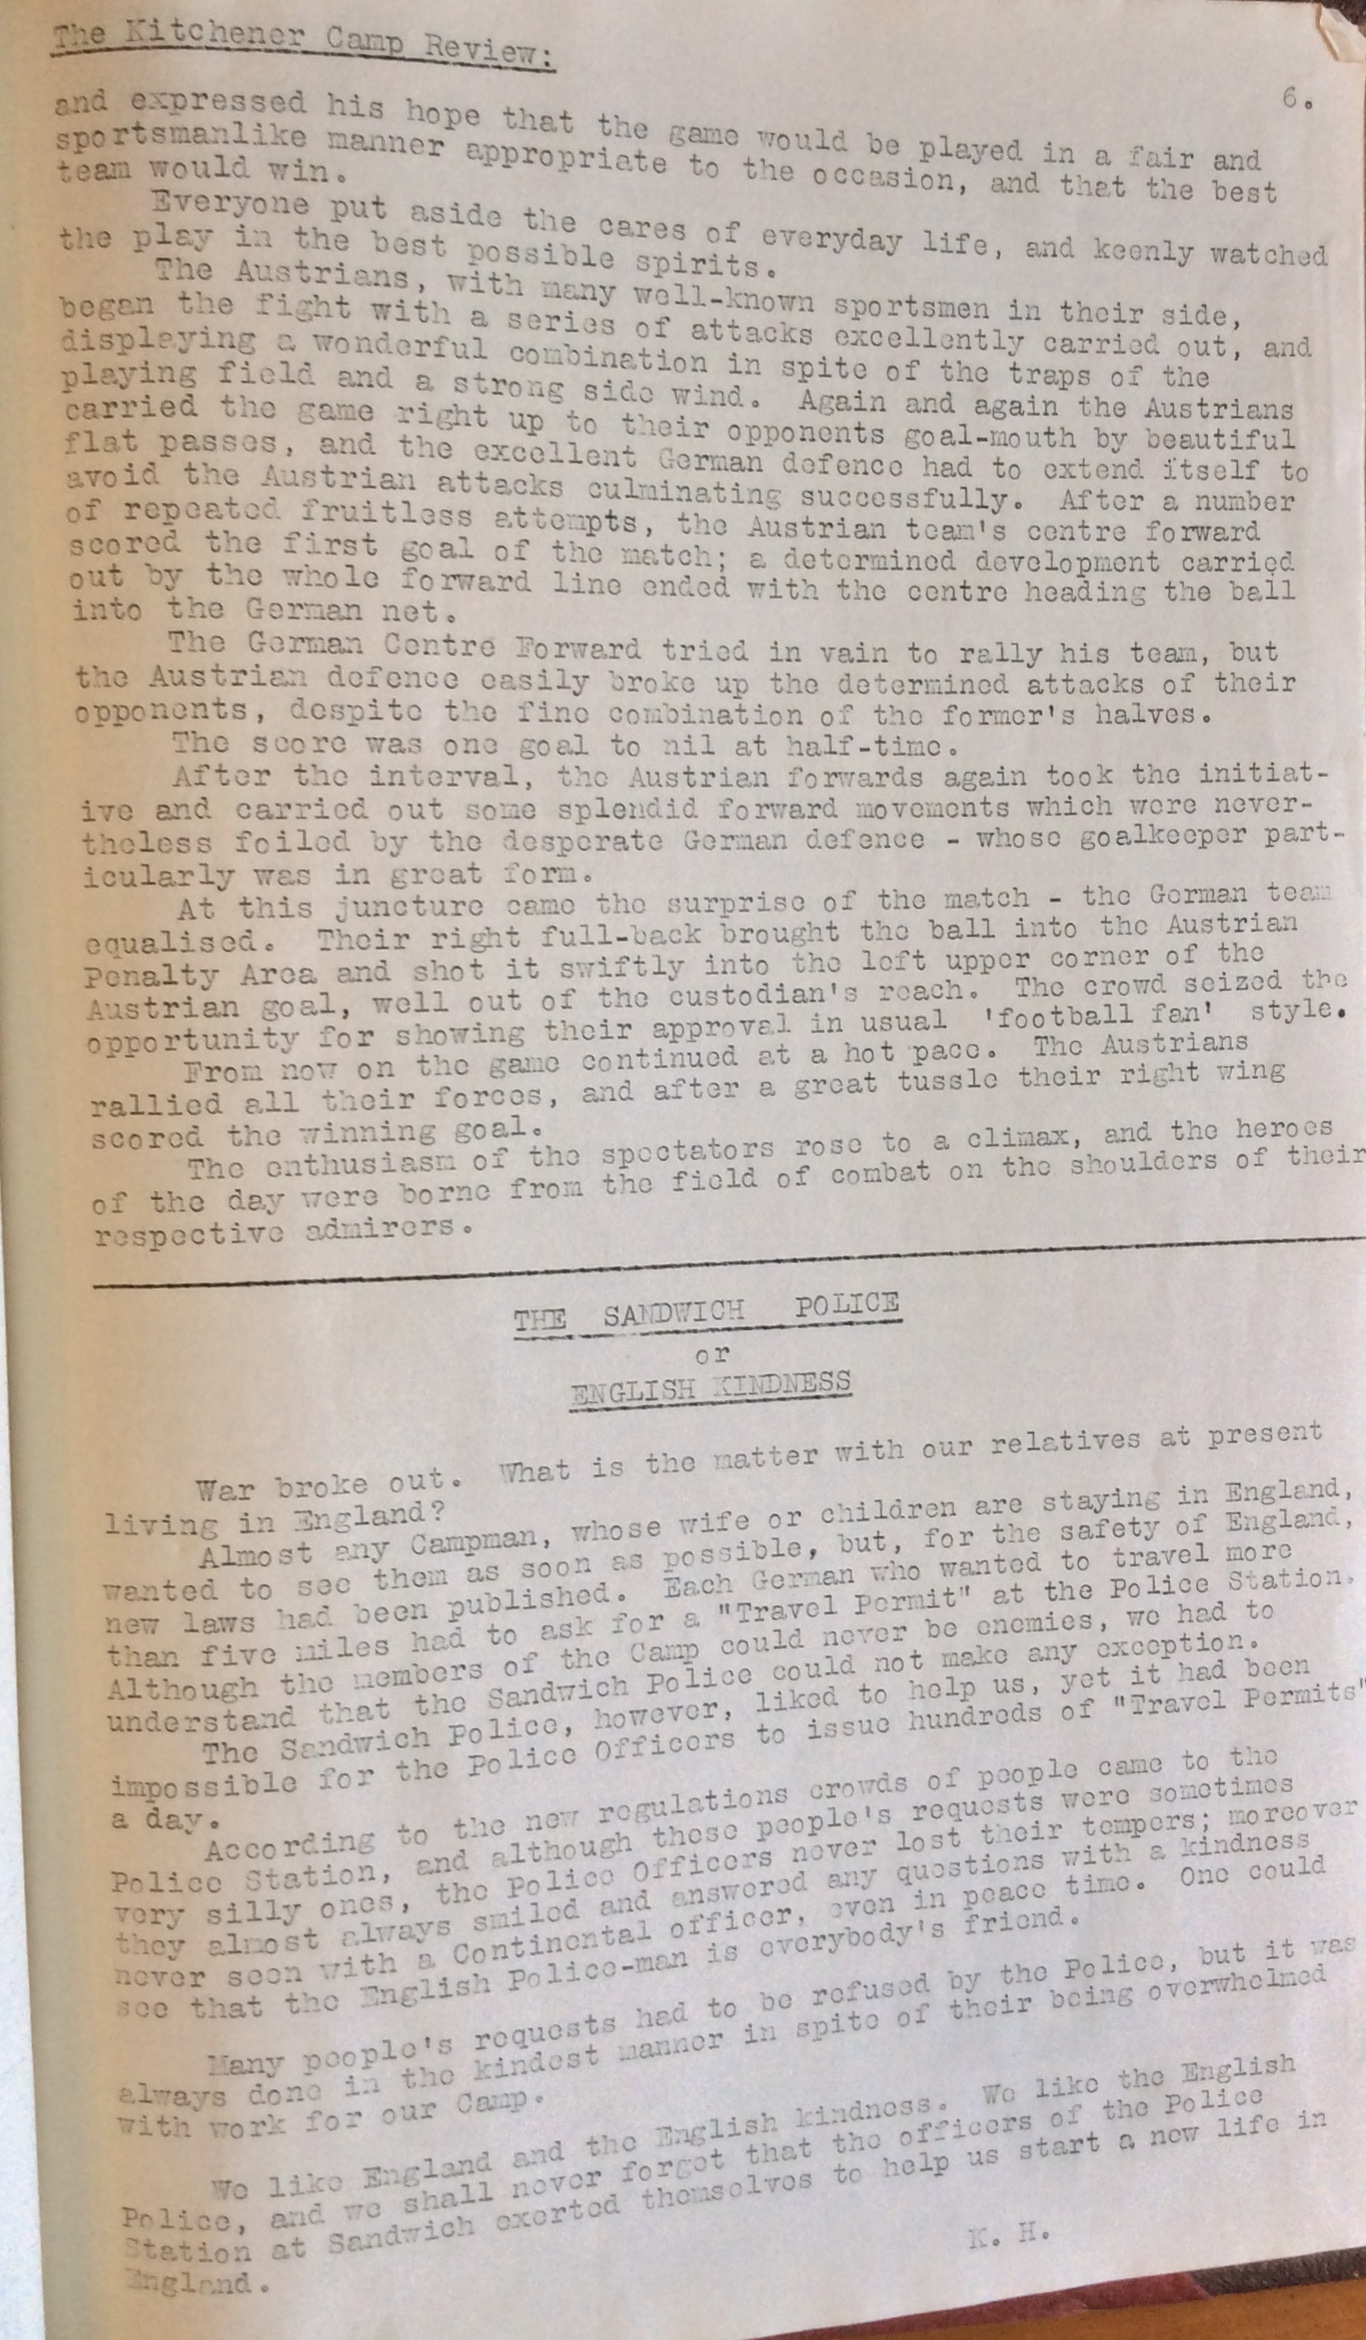 Kitchener Camp Review, November 1939, page 6